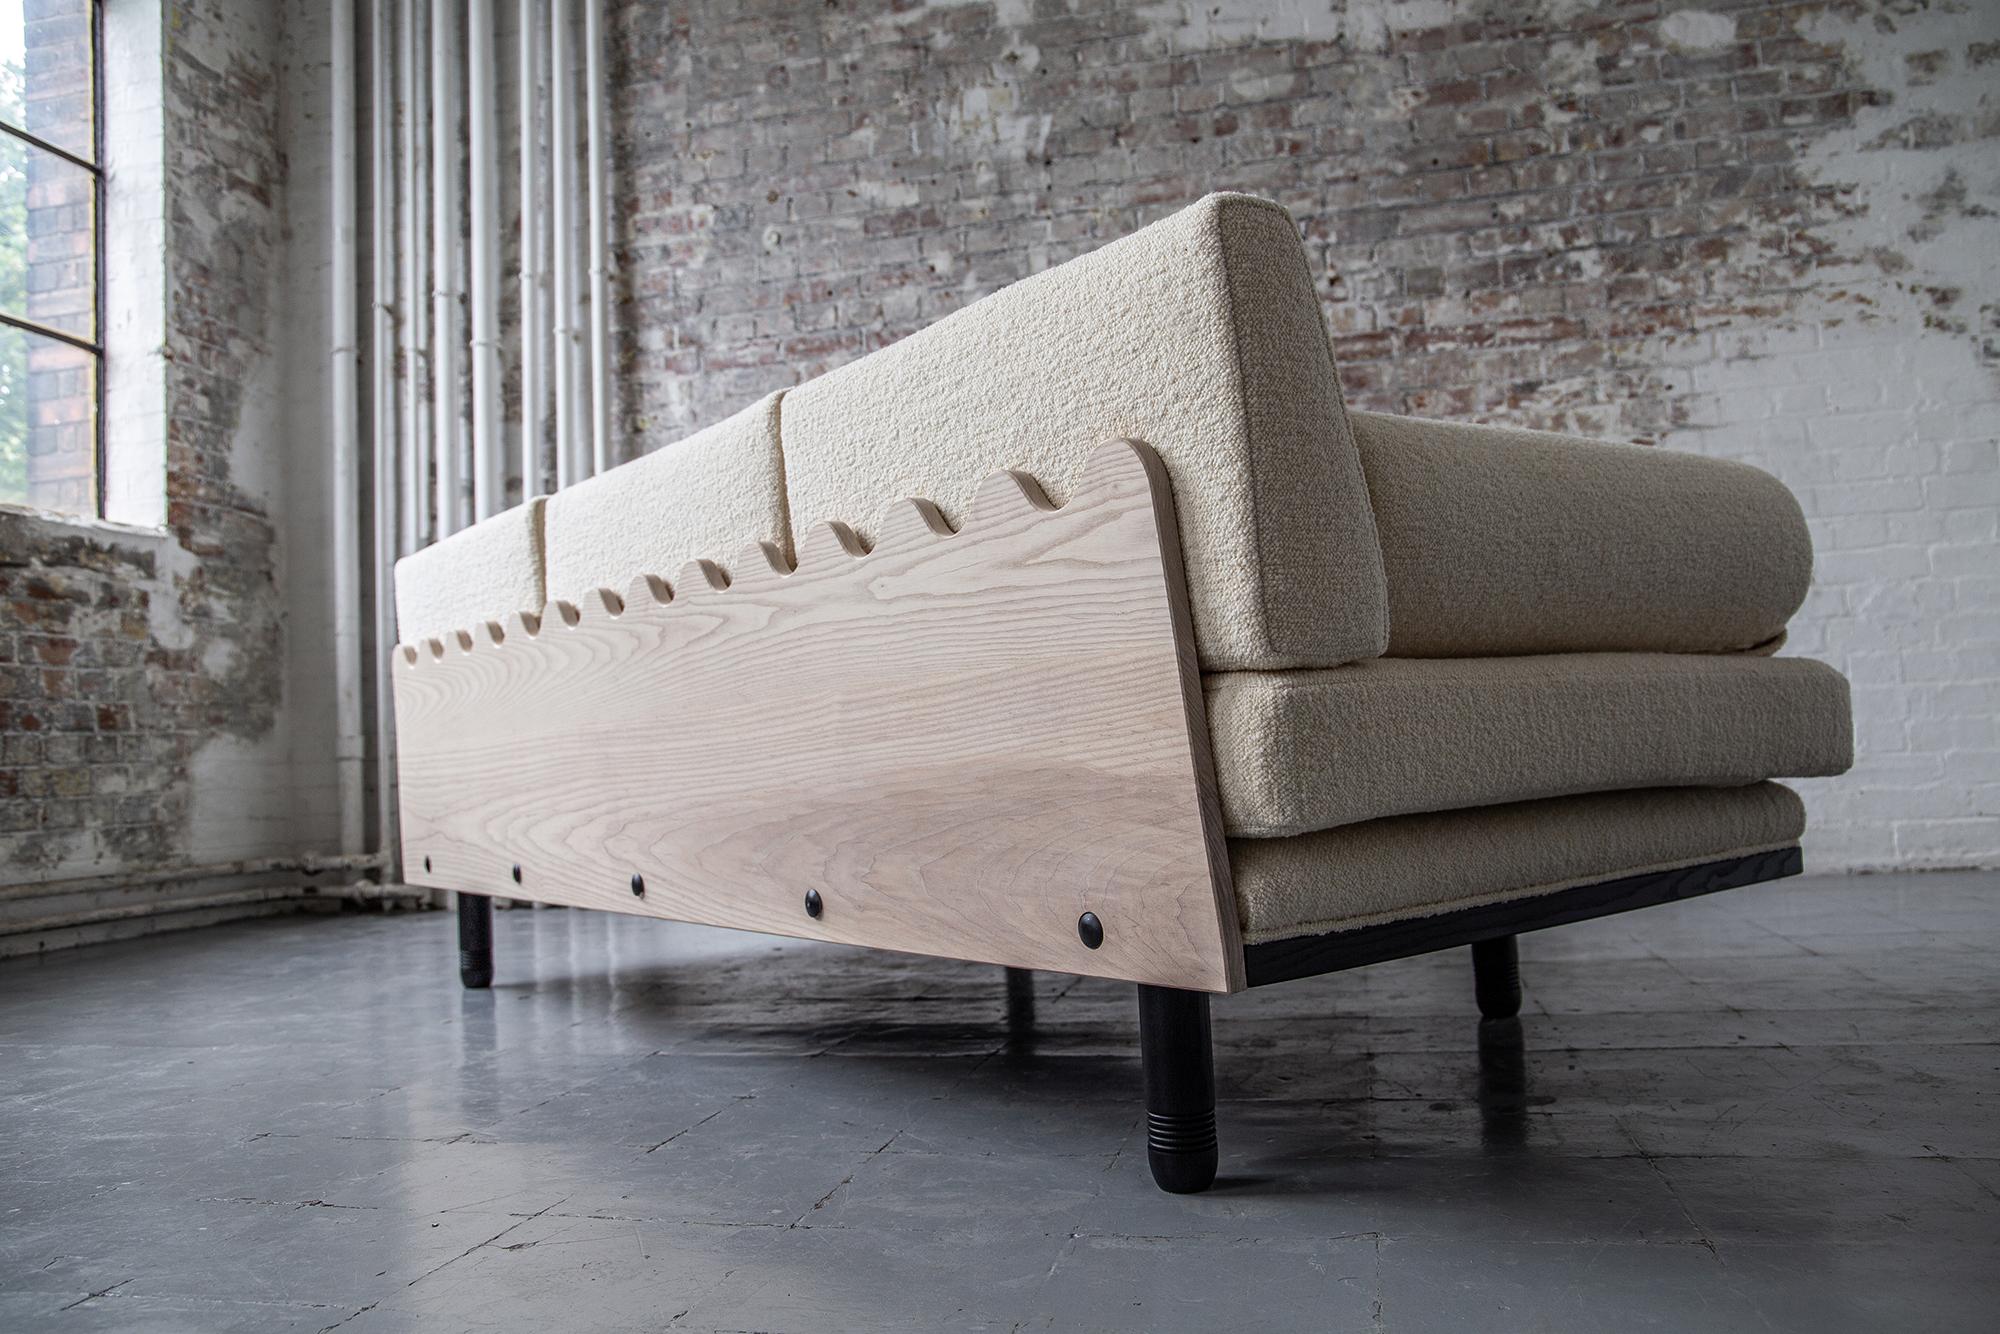 Baalbek, Trapezförmiges Sofa Daybed von Toad Gallery, Contemporary Edition 2022 (Postmoderne) im Angebot